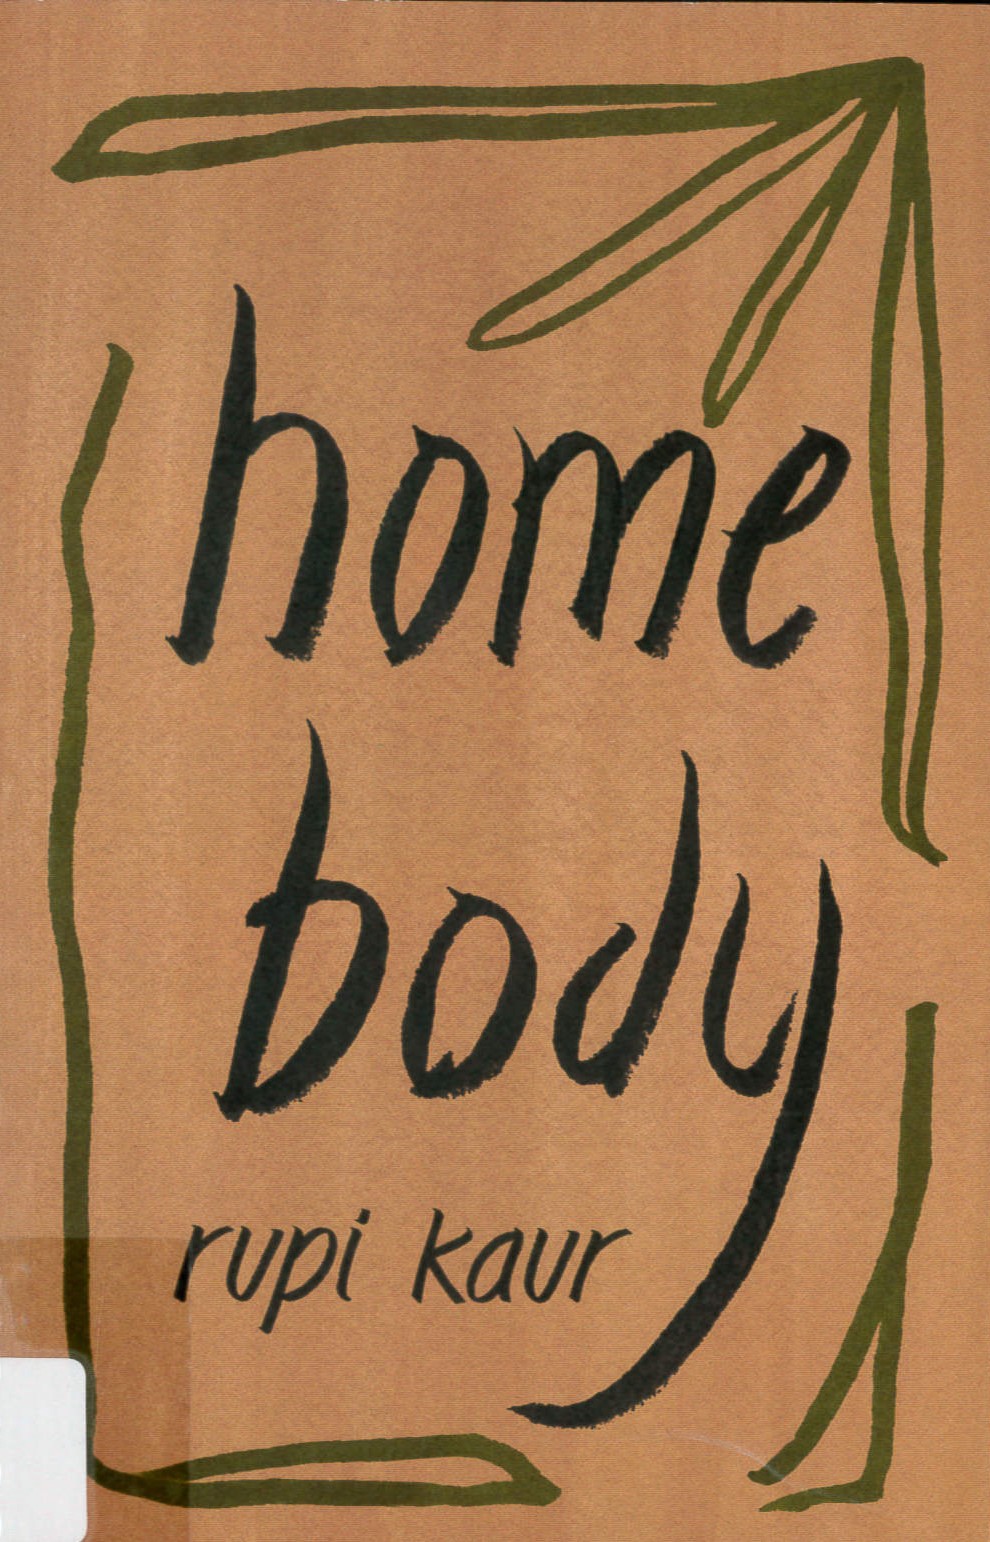 Home body /